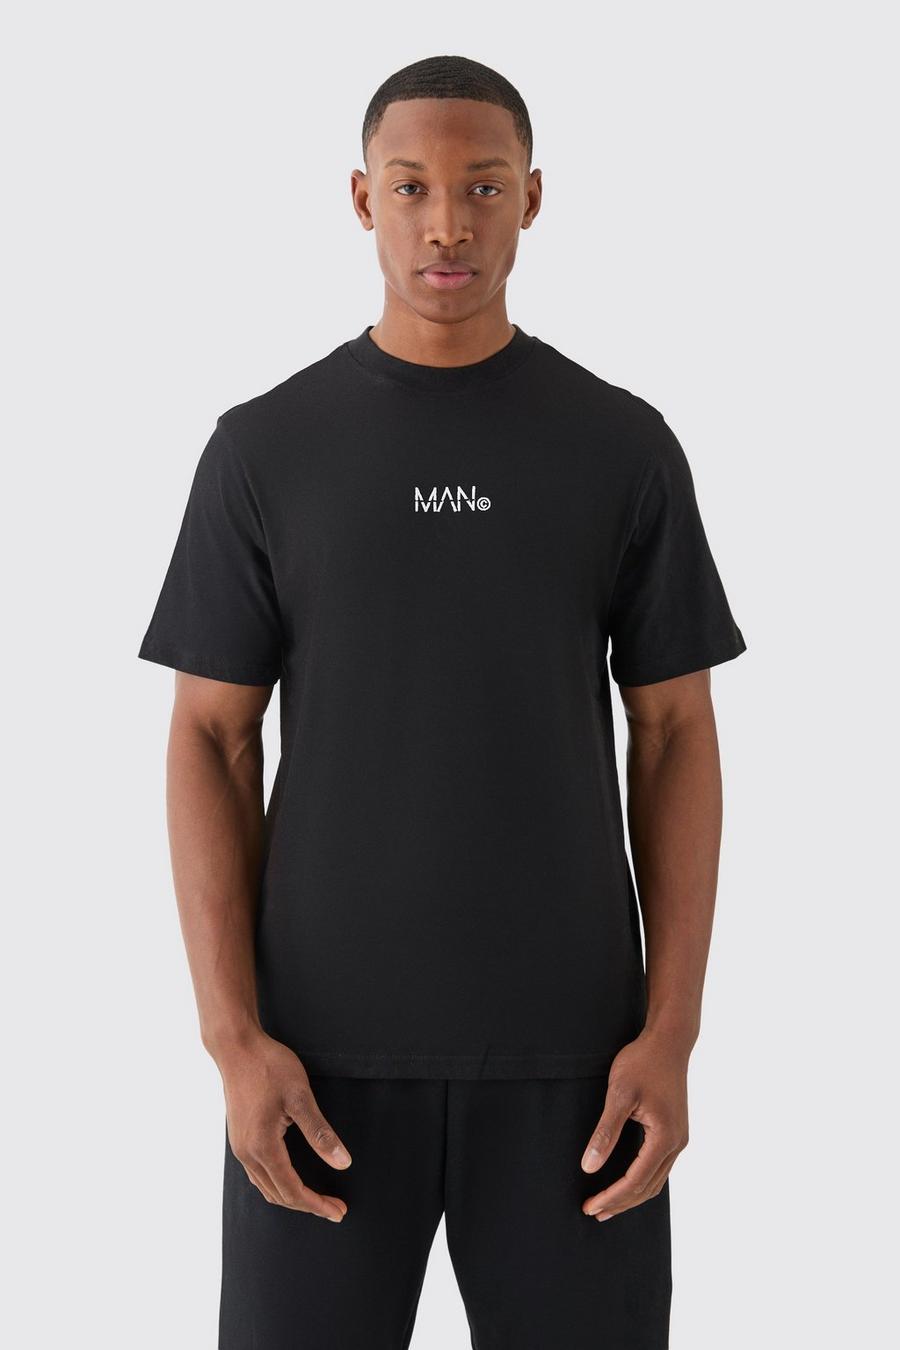 T-shirt - MAN, Black